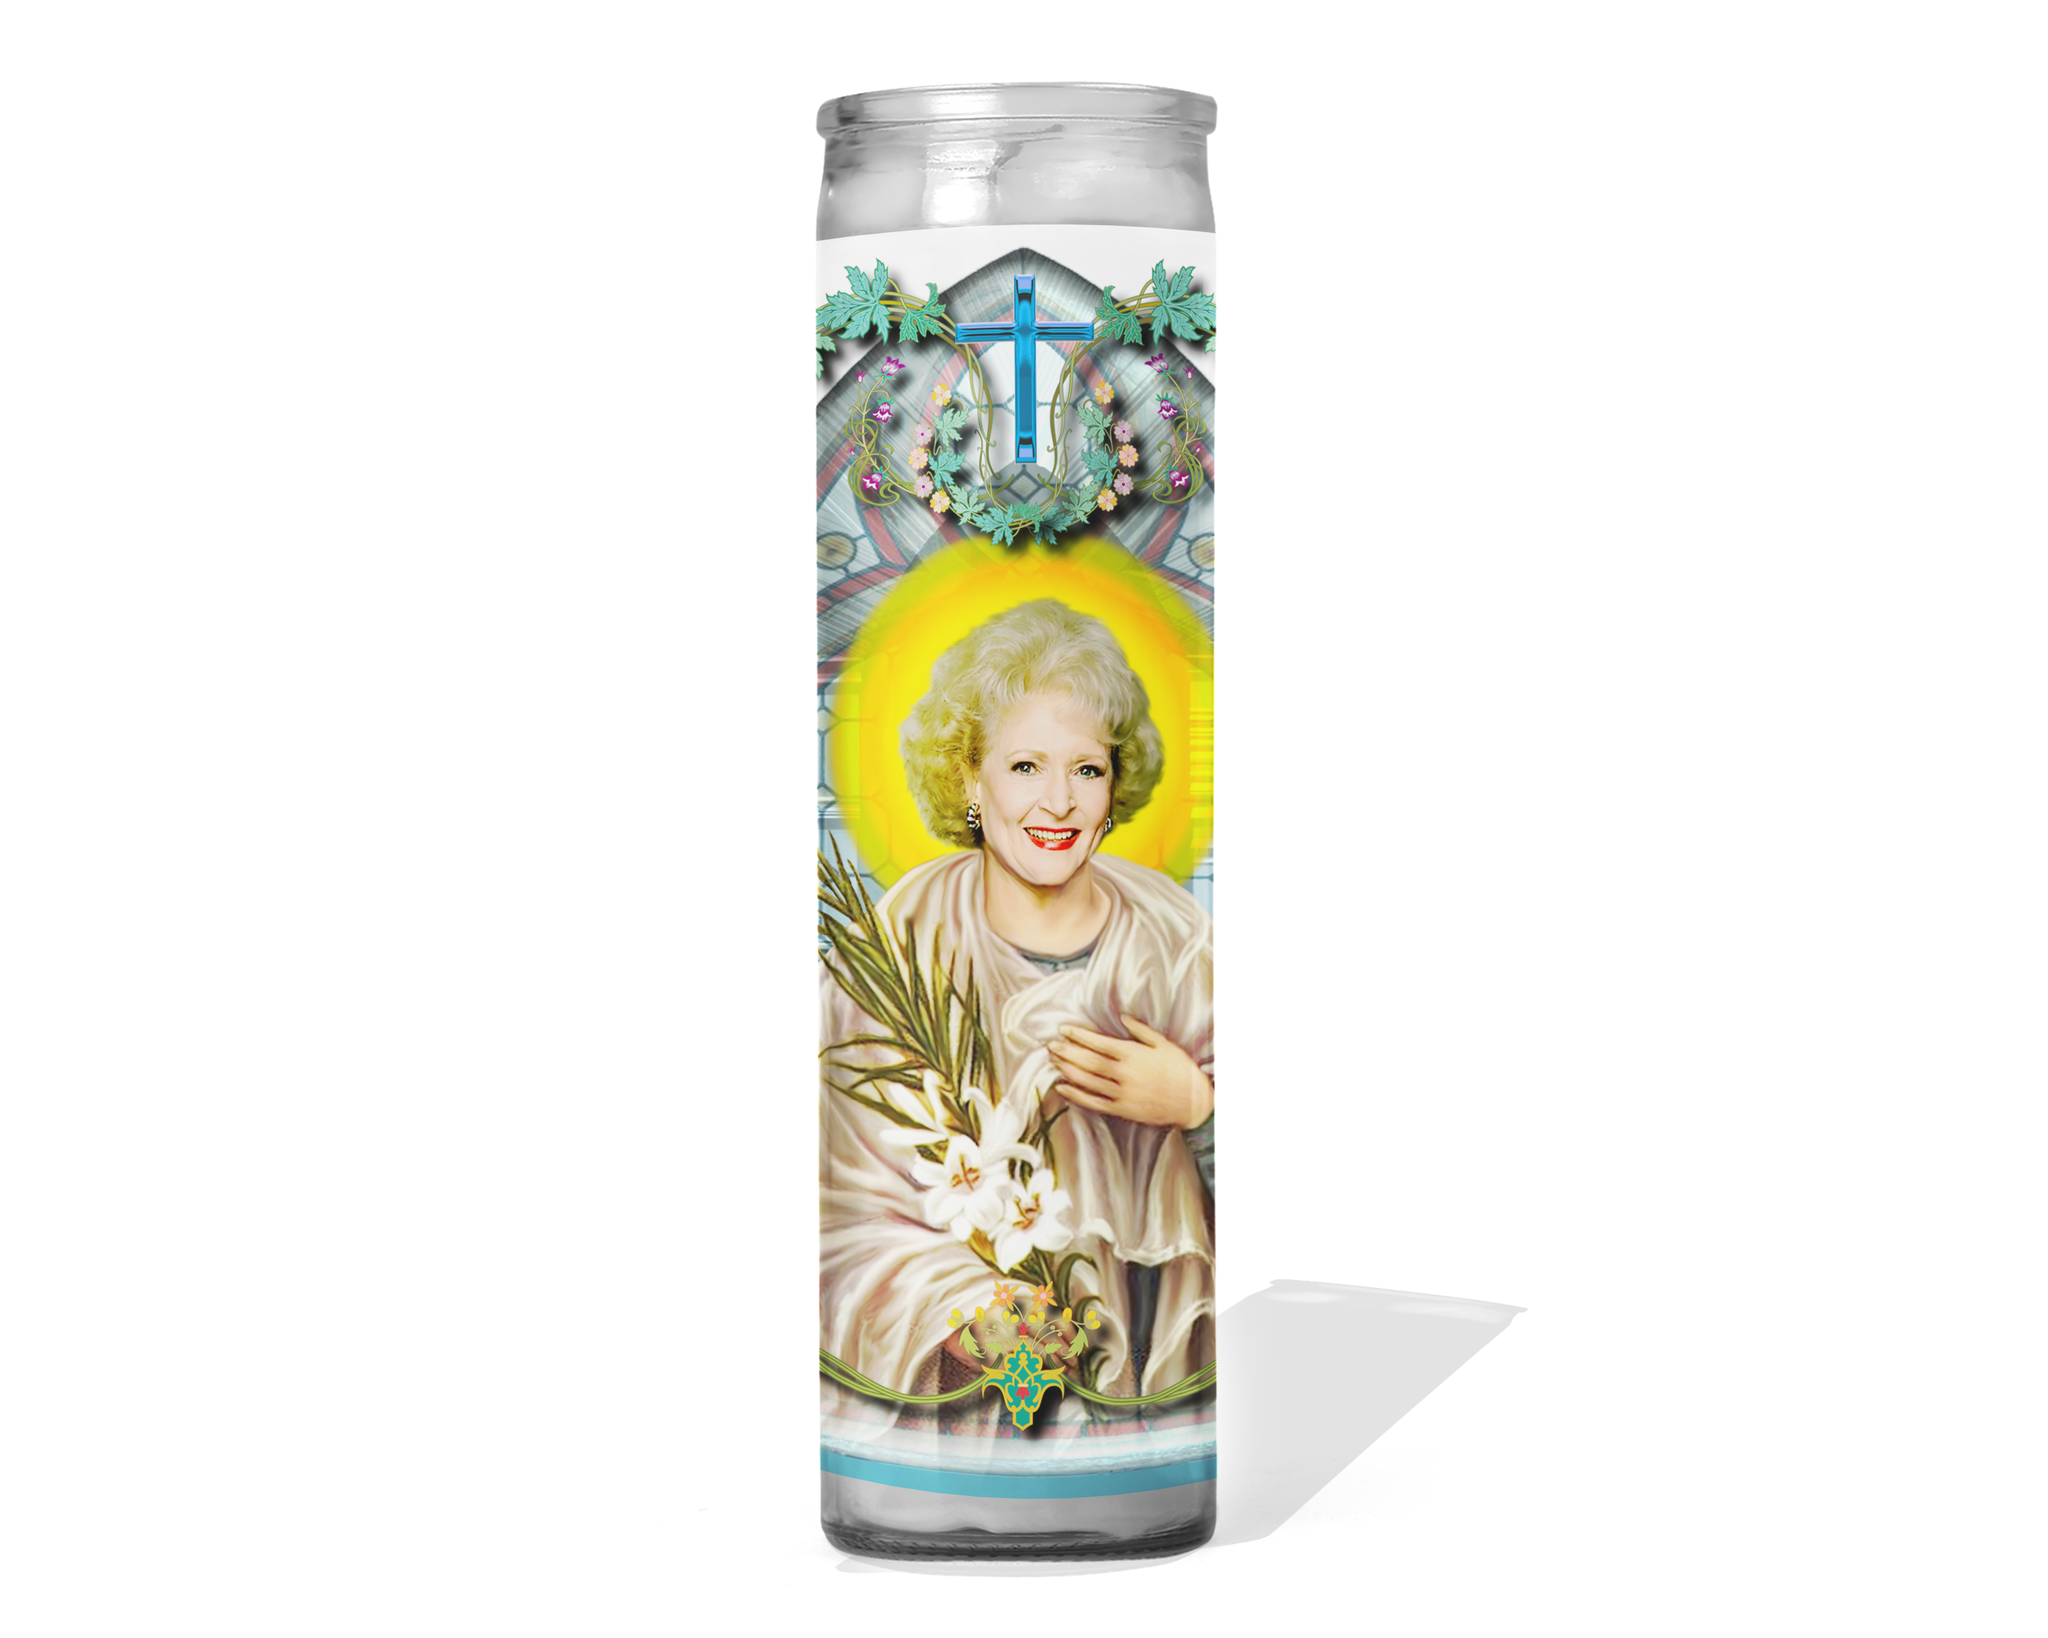 Betty White Prayer Candle - Rose Nylund Golden Girls